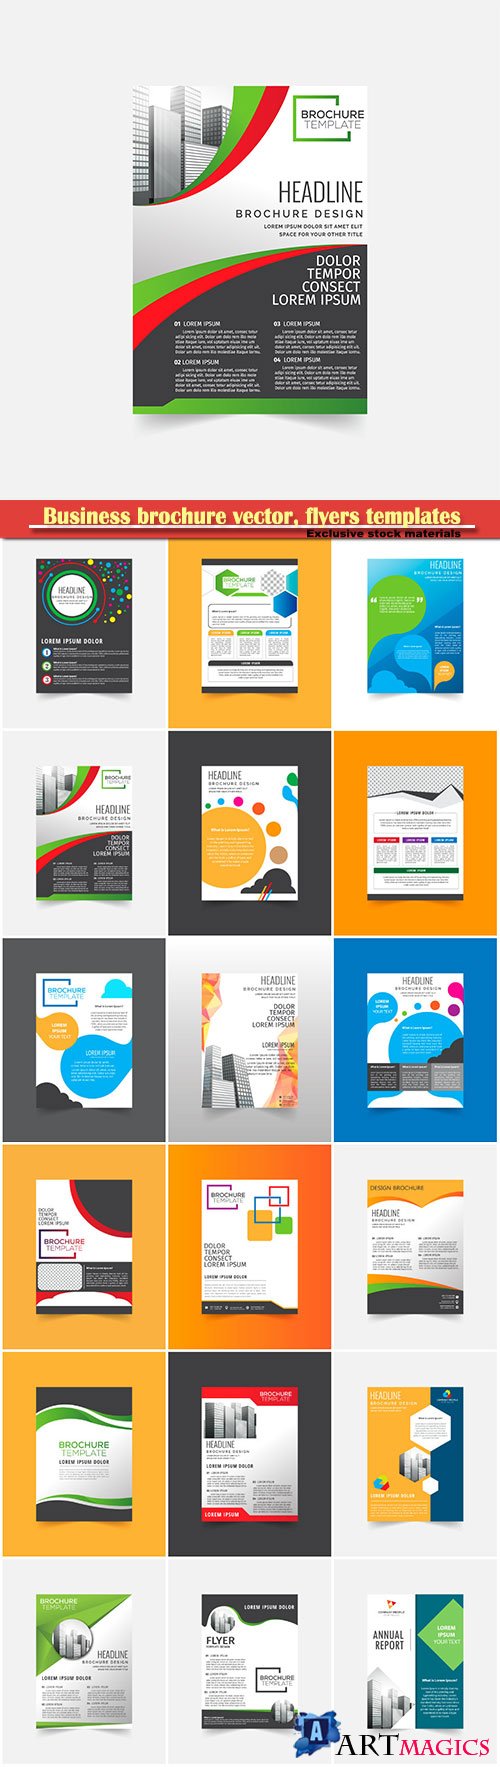 Business brochure vector, flyers templates, report cover design # 90